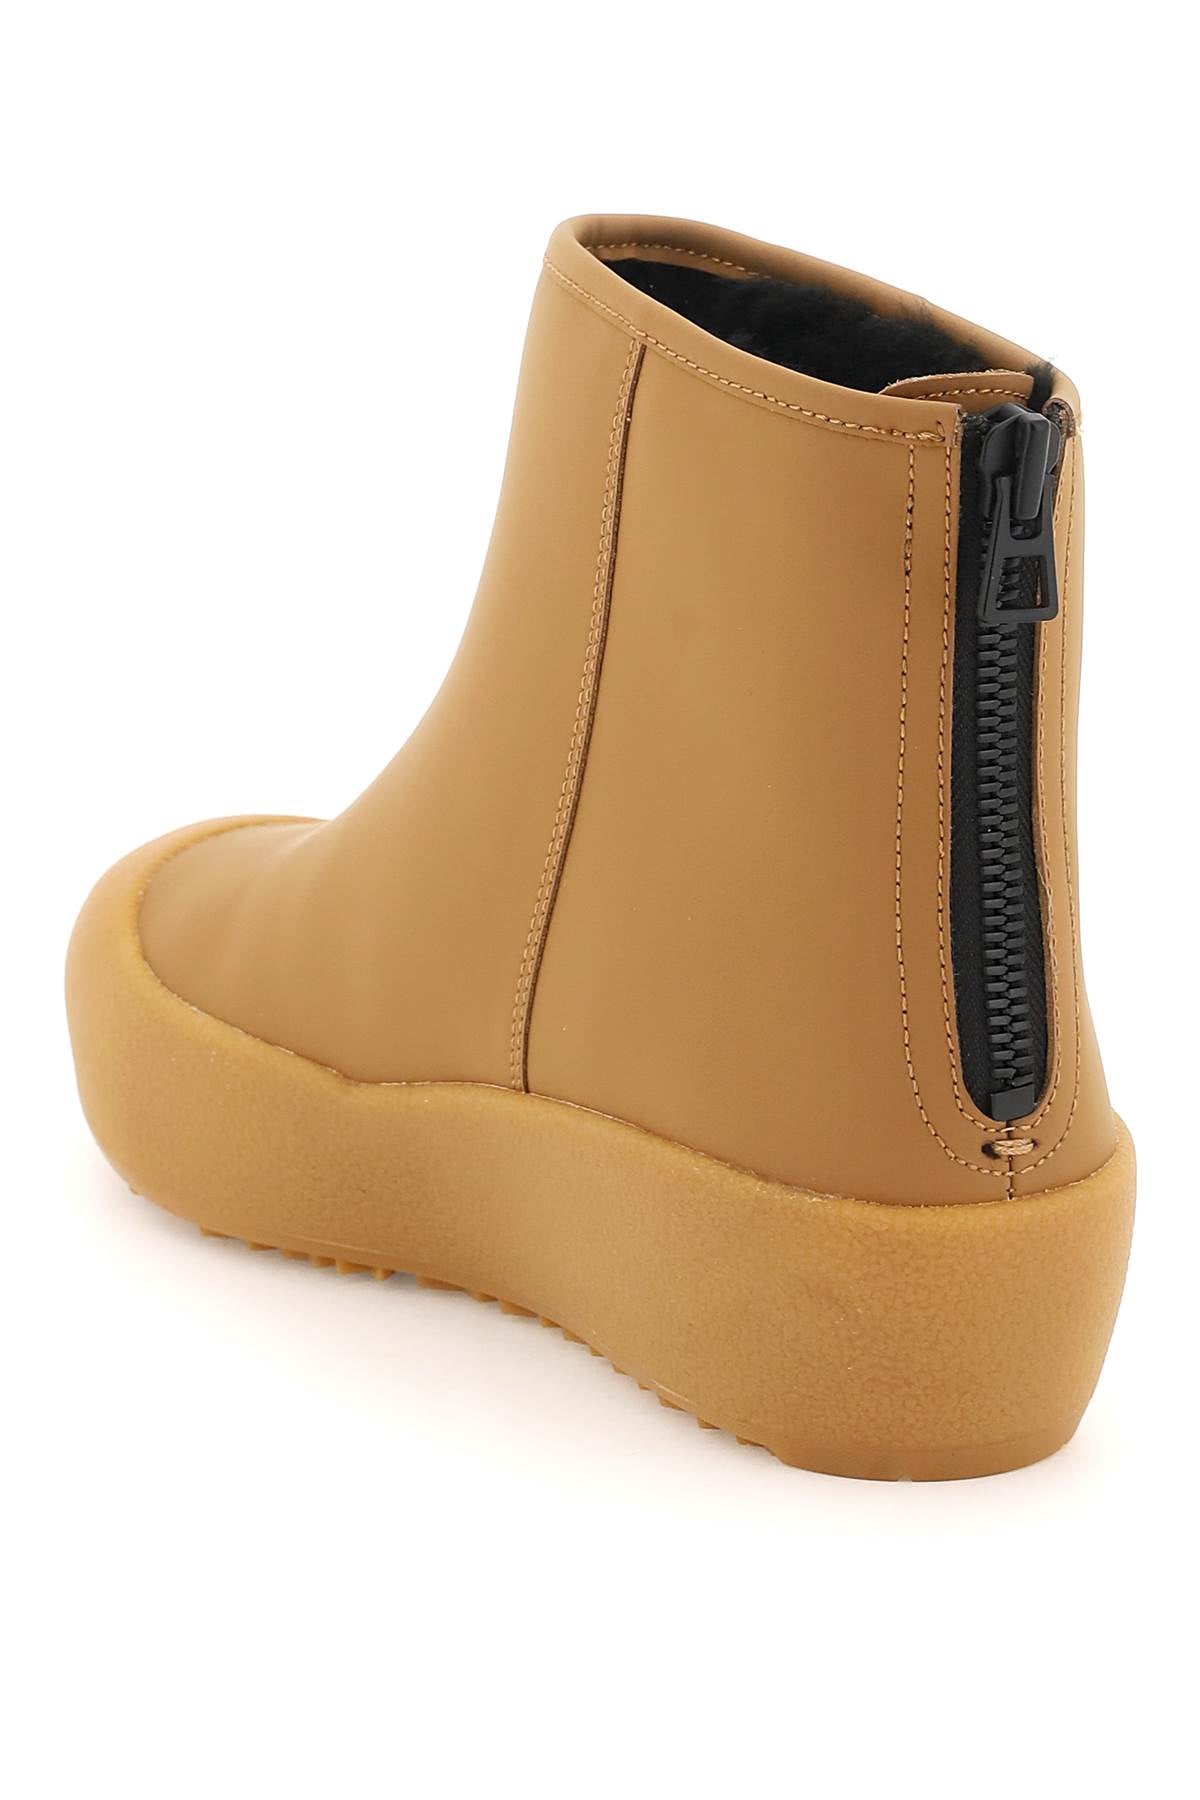 Bally 'Bernina' Leather Ankle Boots-Bally-Urbanheer